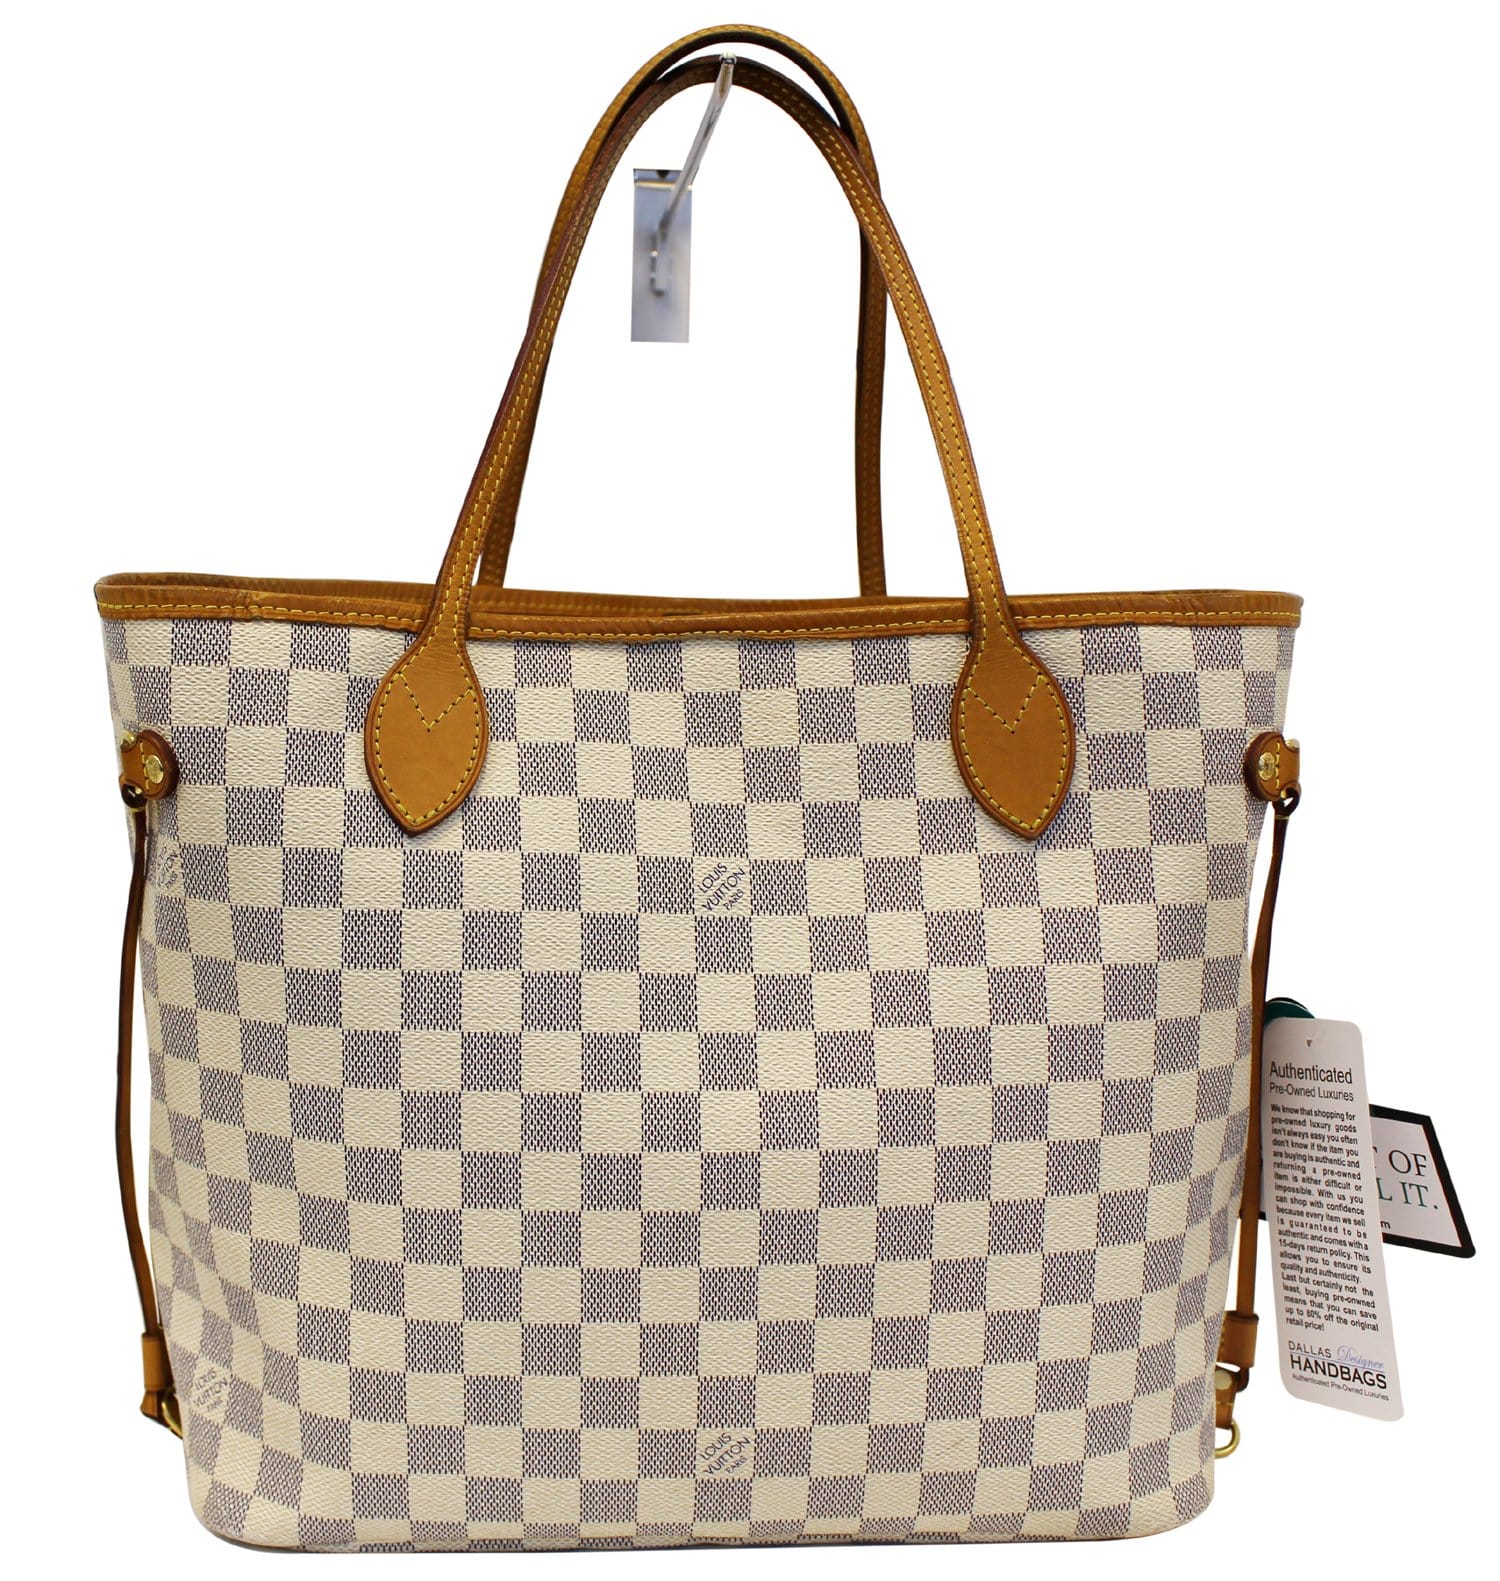 Shop Authentic Used Designer Handbags: Used Louis Vuitton  Louis vuitton  bag neverfull, Used designer handbags, Used louis vuitton